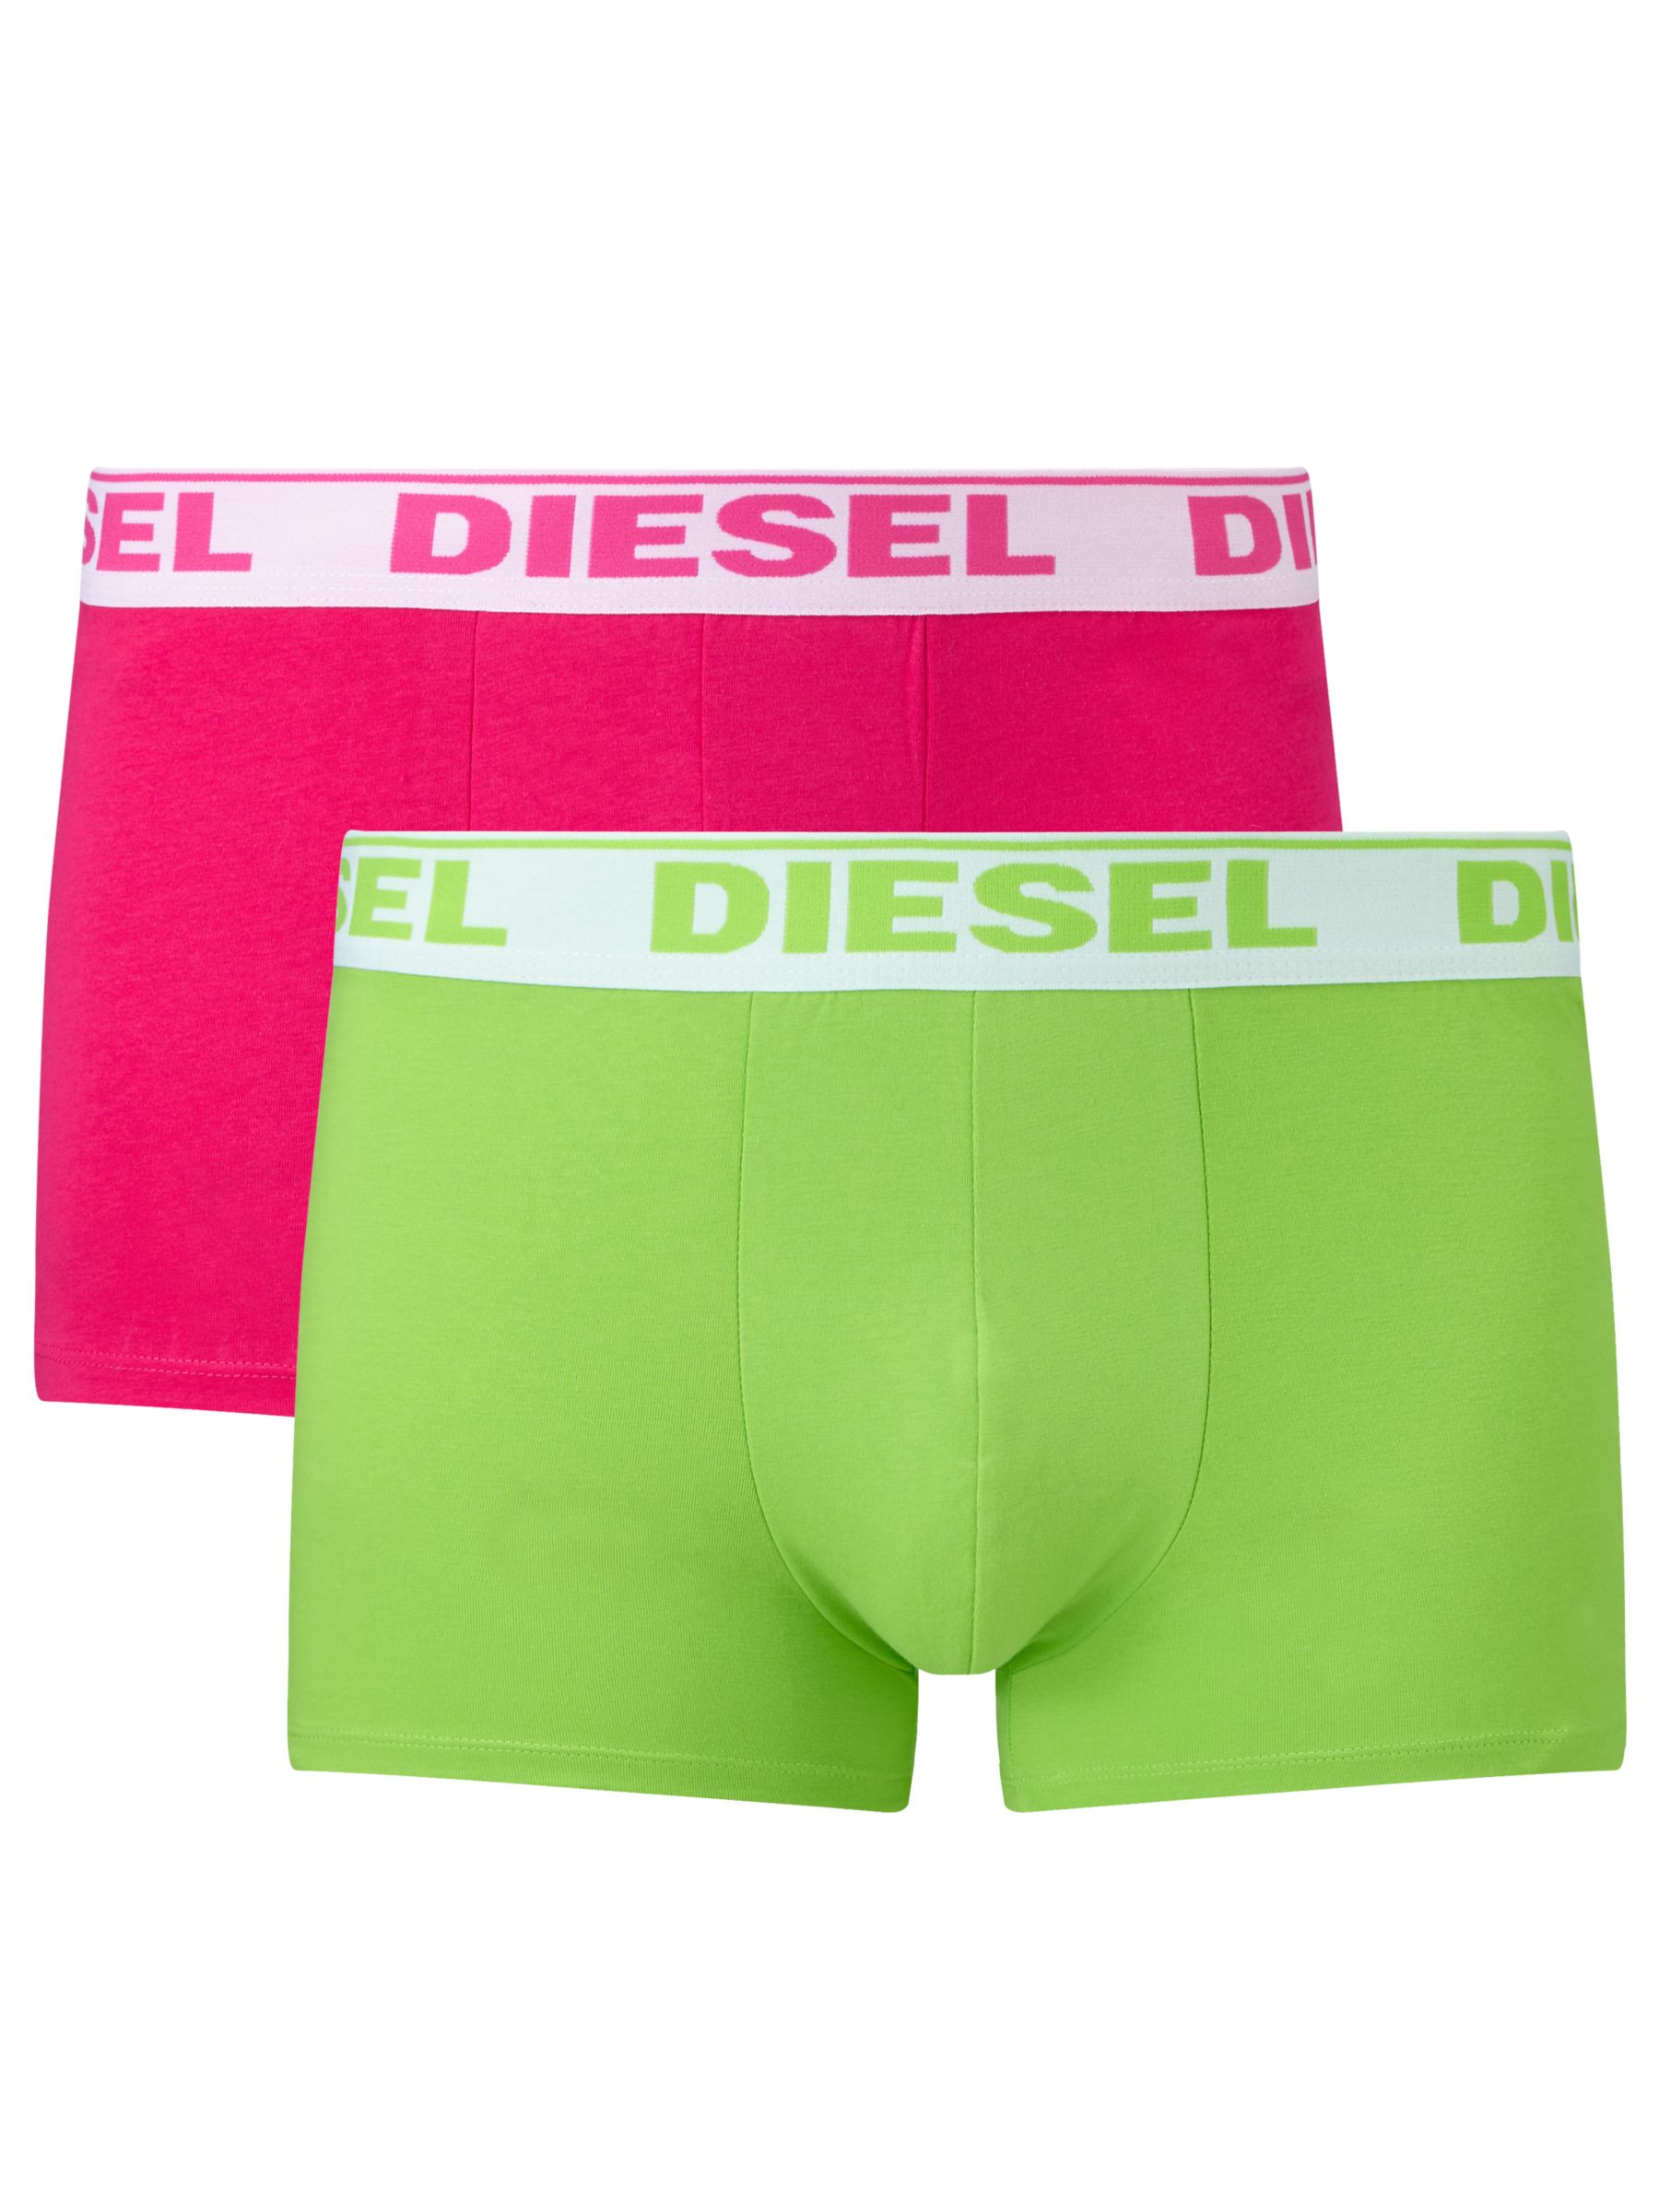 Buy Diesel Shawn Boxer Trunks, Pack of 2, Pink/Lime | John Lewis